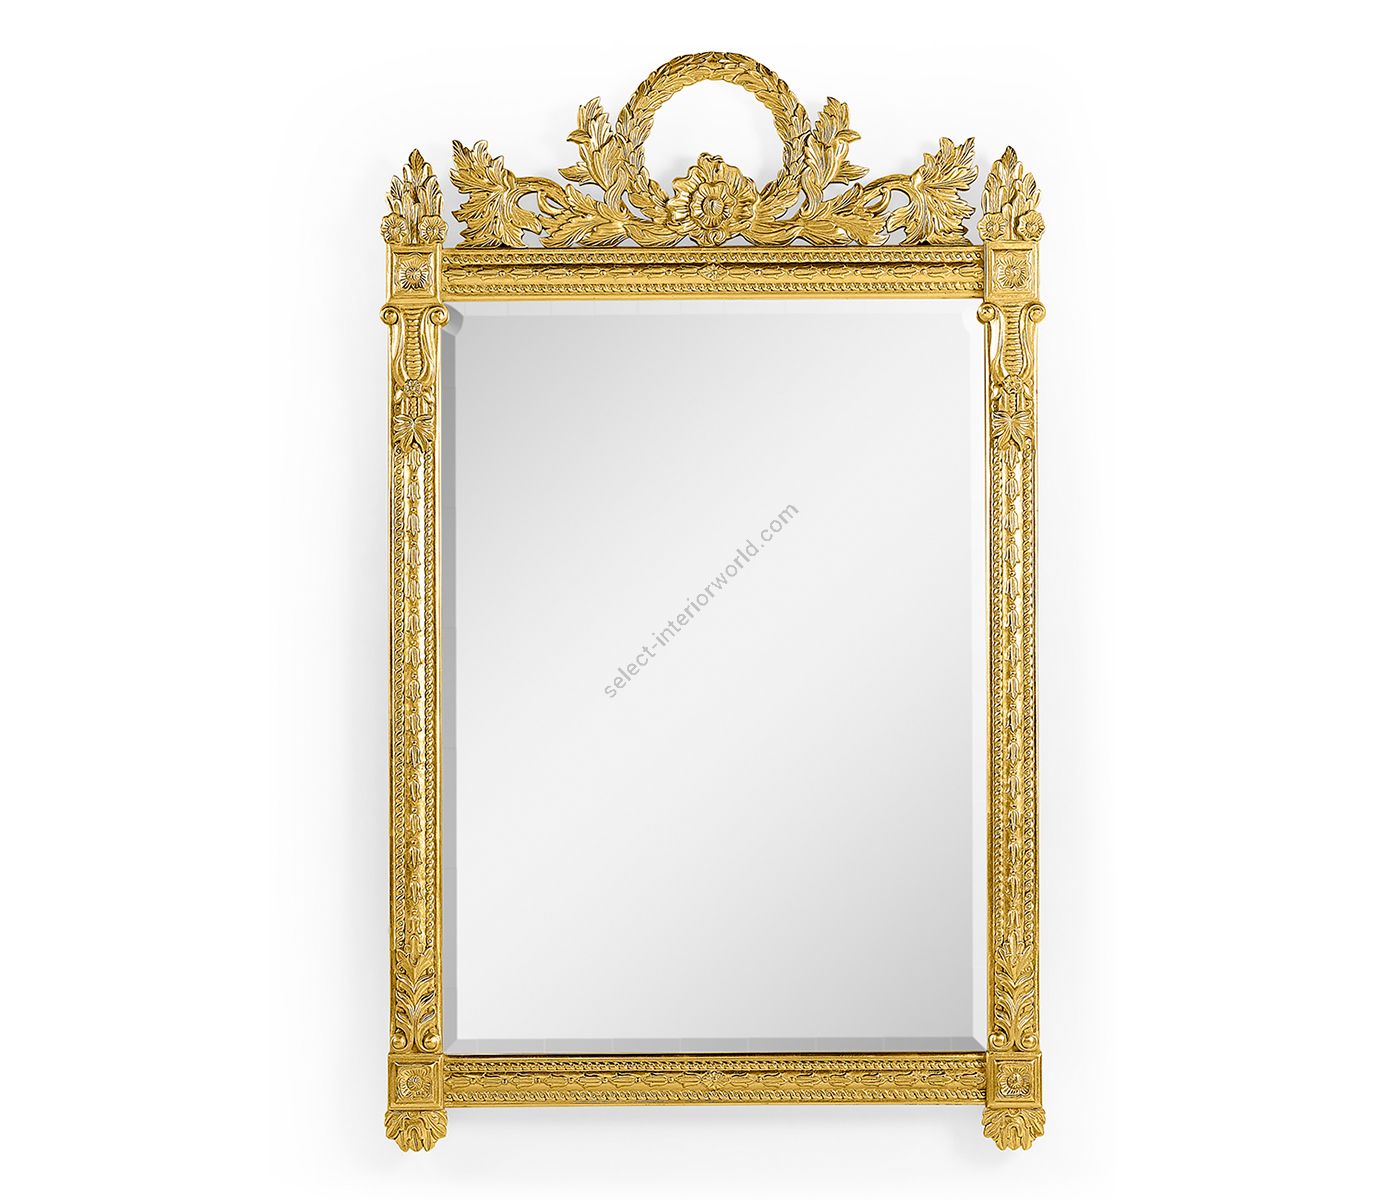 Jonathan Charles / Empire style gilded mirror / 493060-GIL